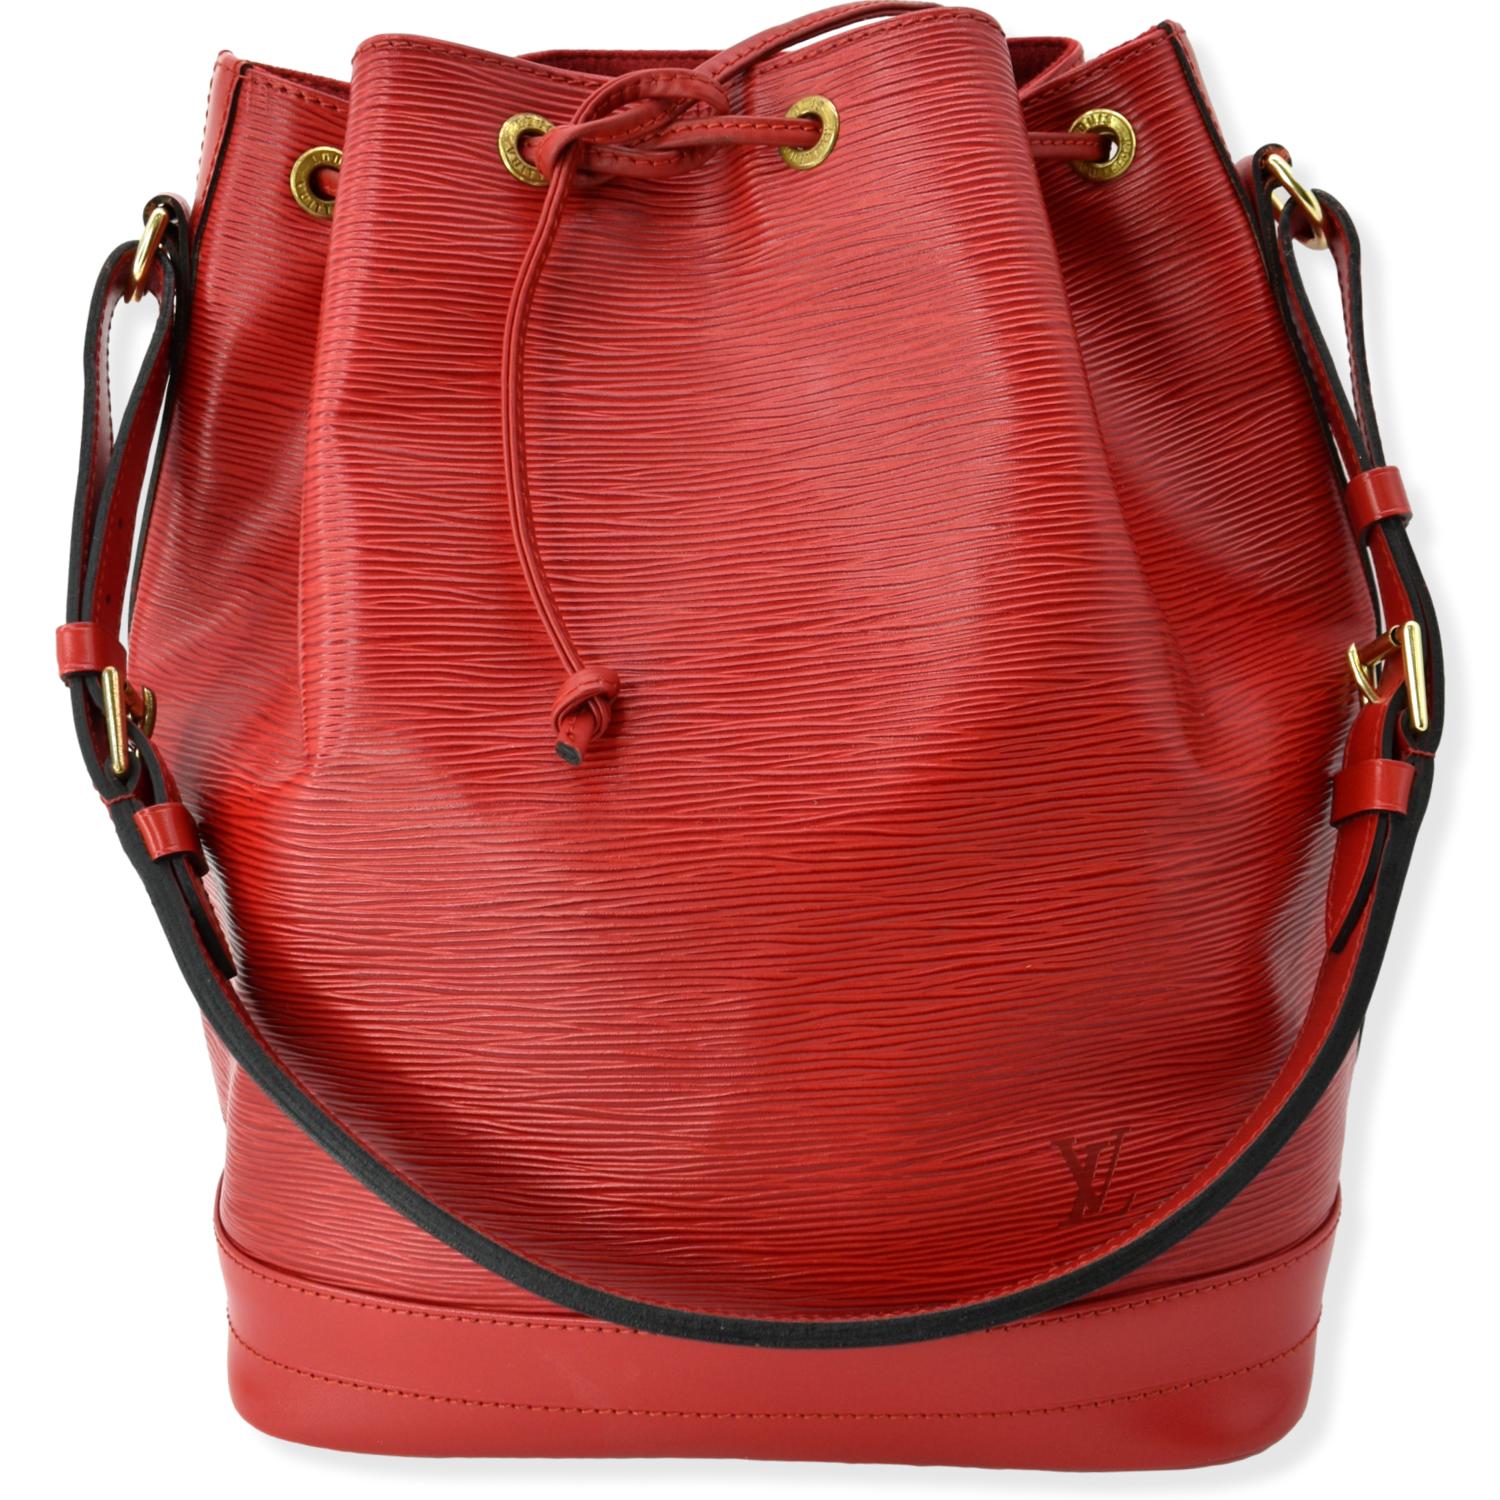 Louis Vuitton Noé PM shoulder bag in red and black epi leather, gold  hardware